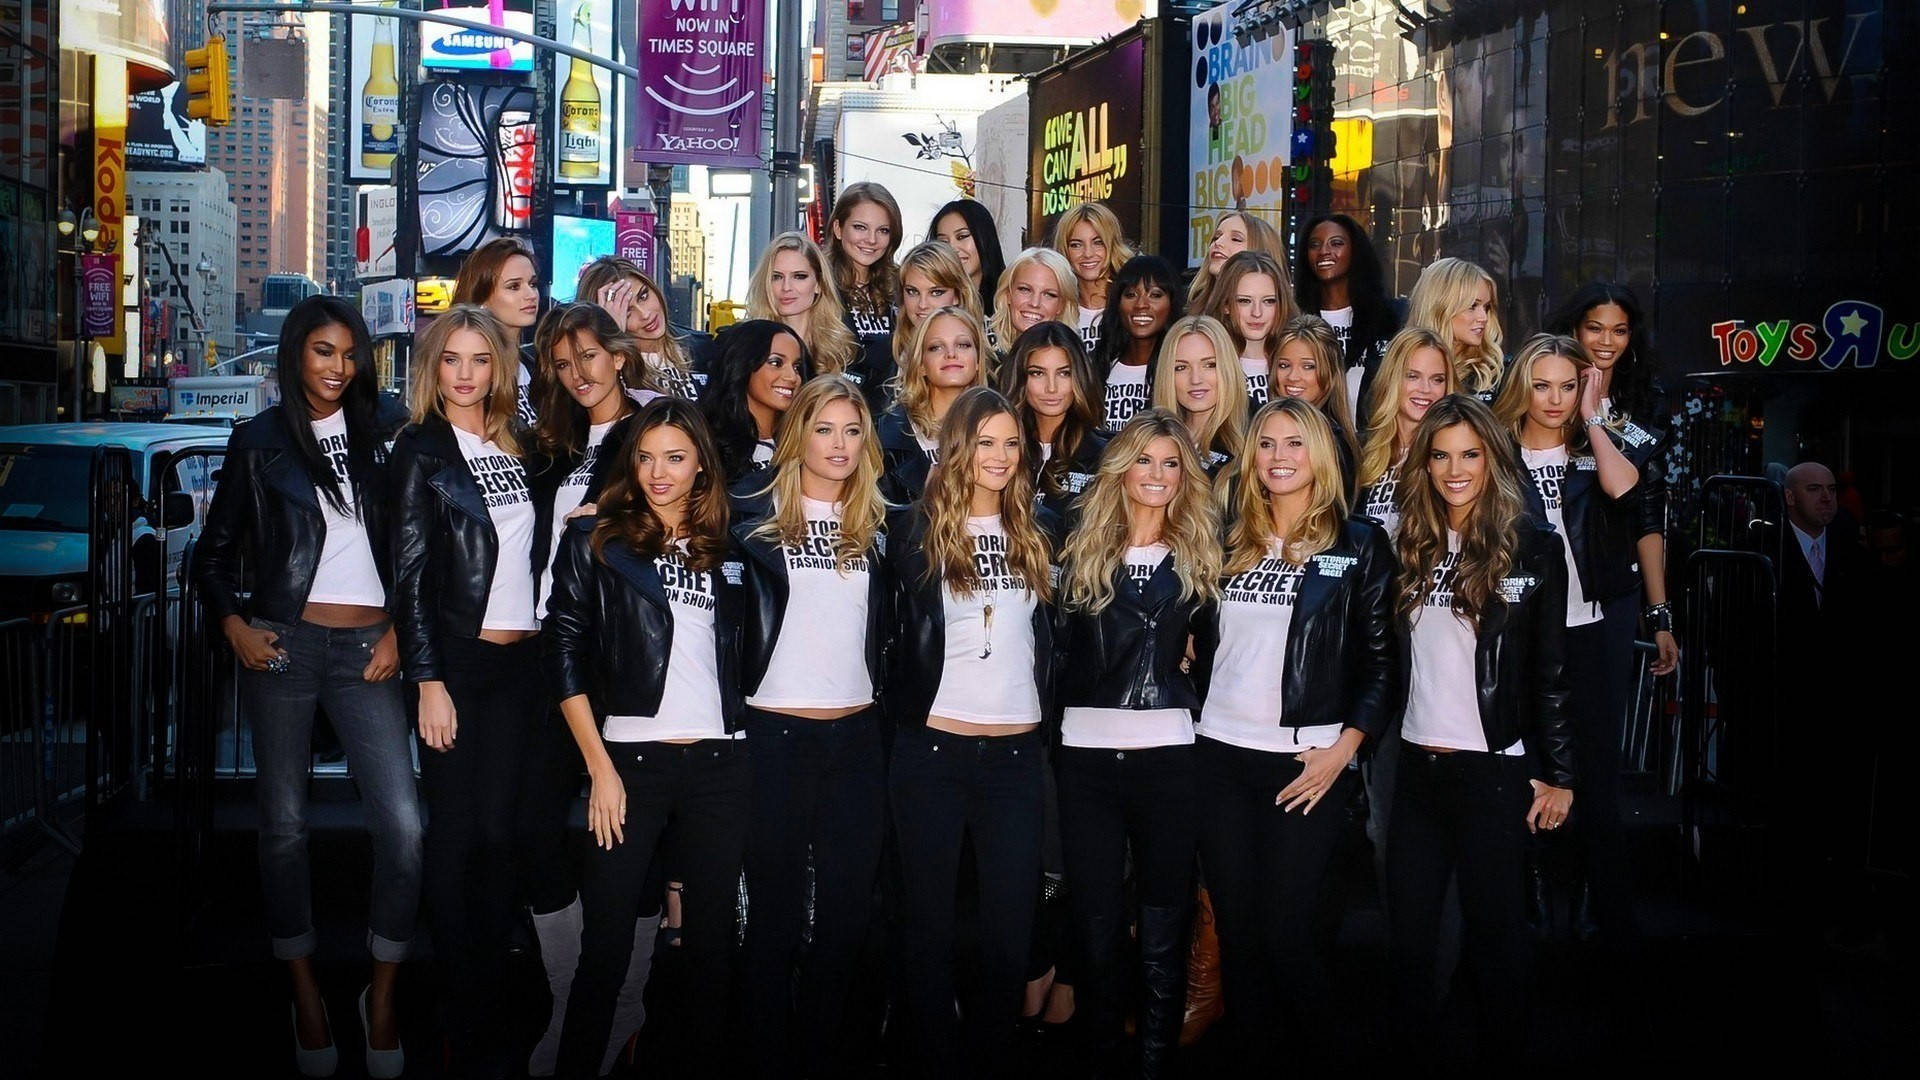 Victoria's Secret Angels At Times Square